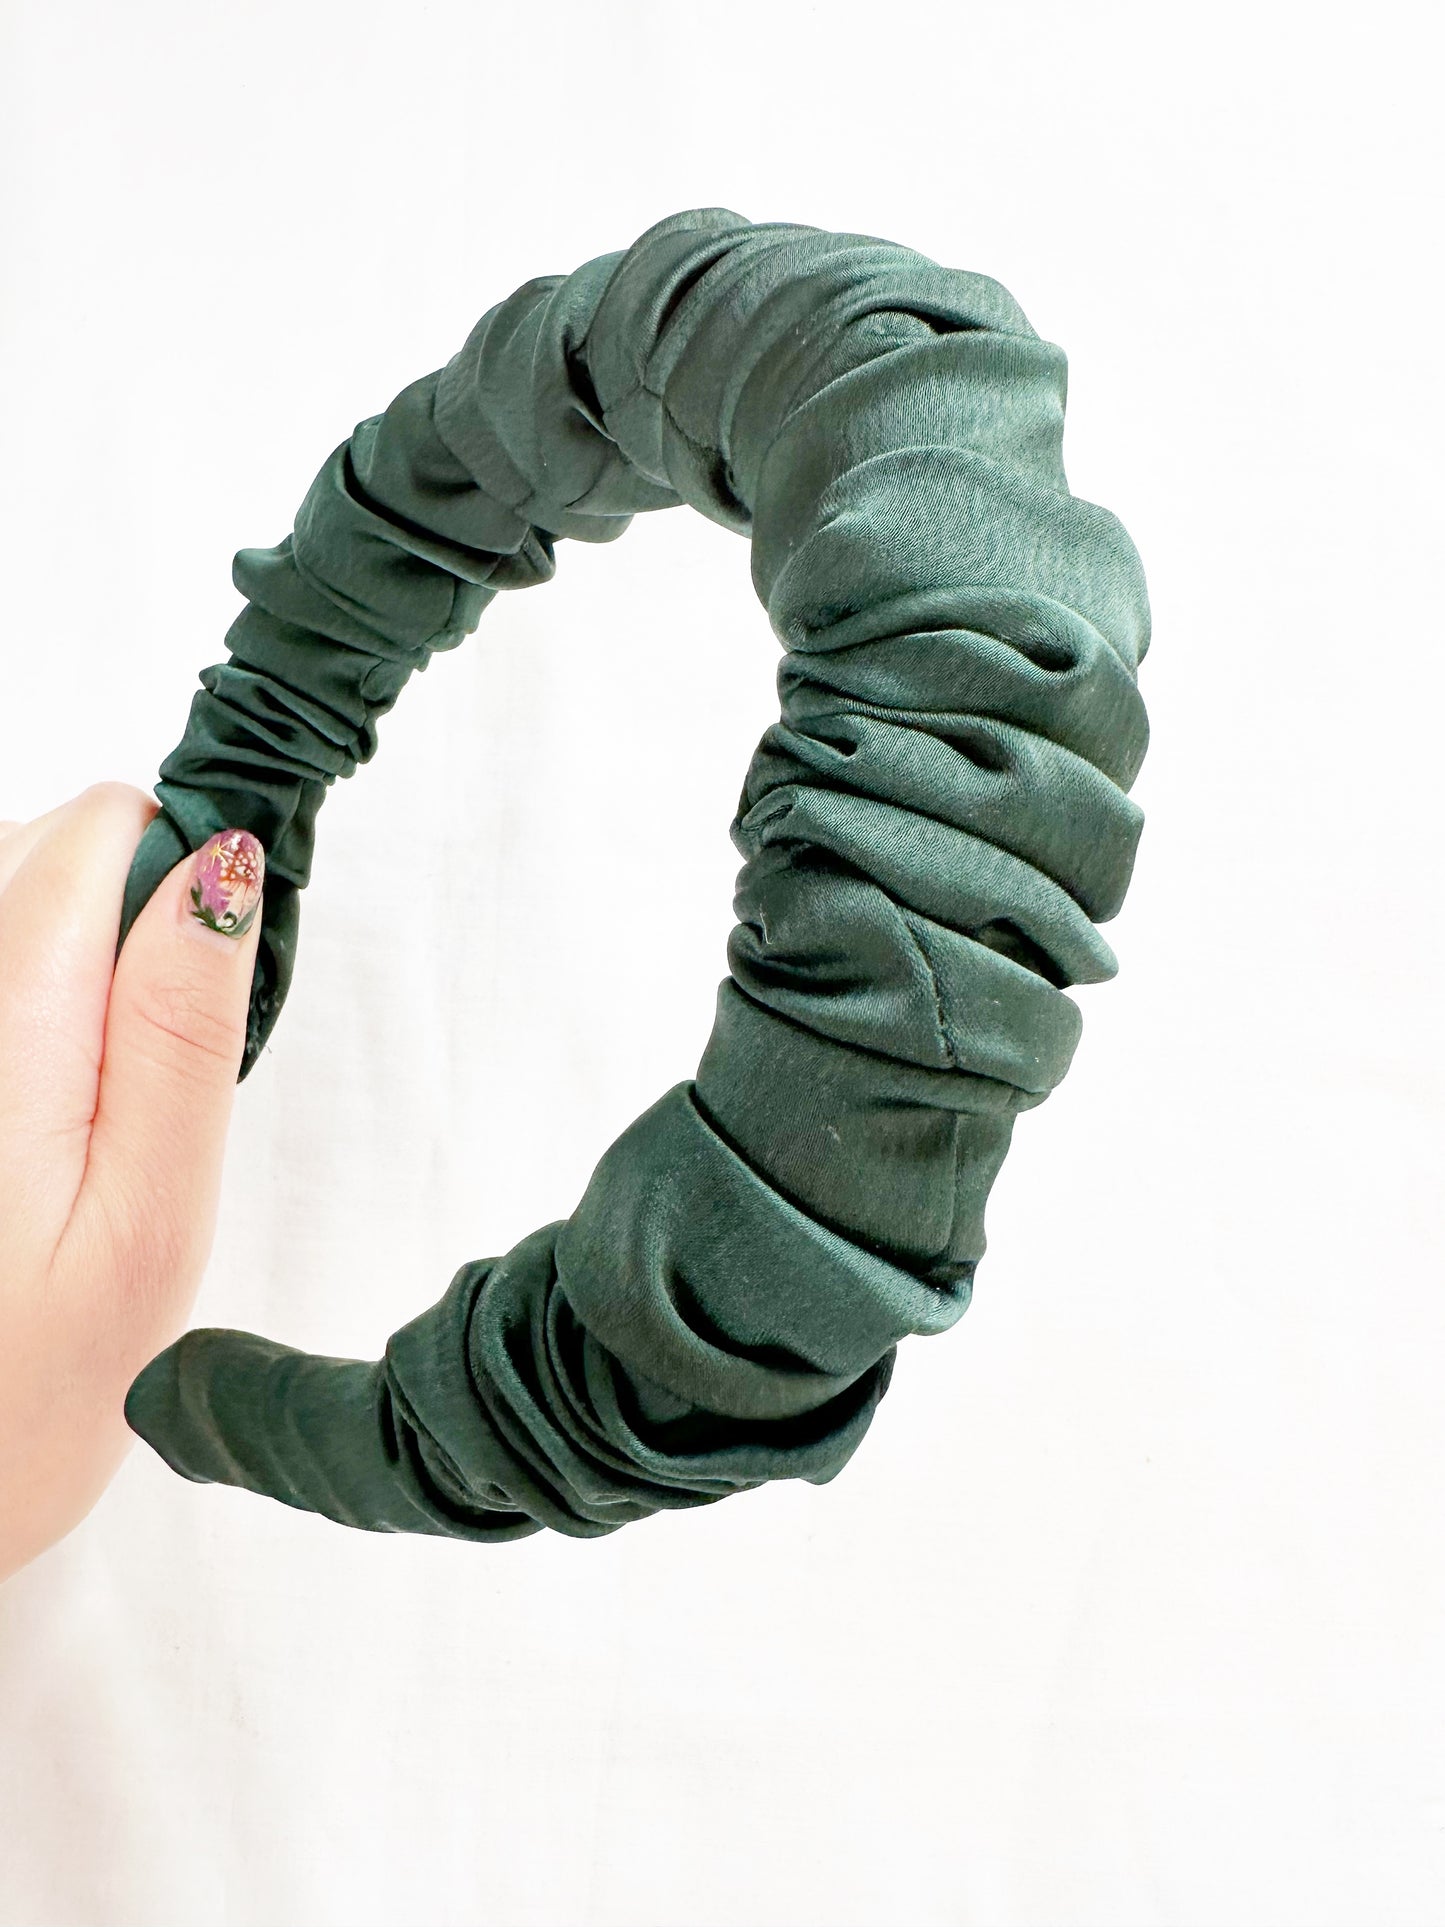 Ruffle Headband in forest green silk